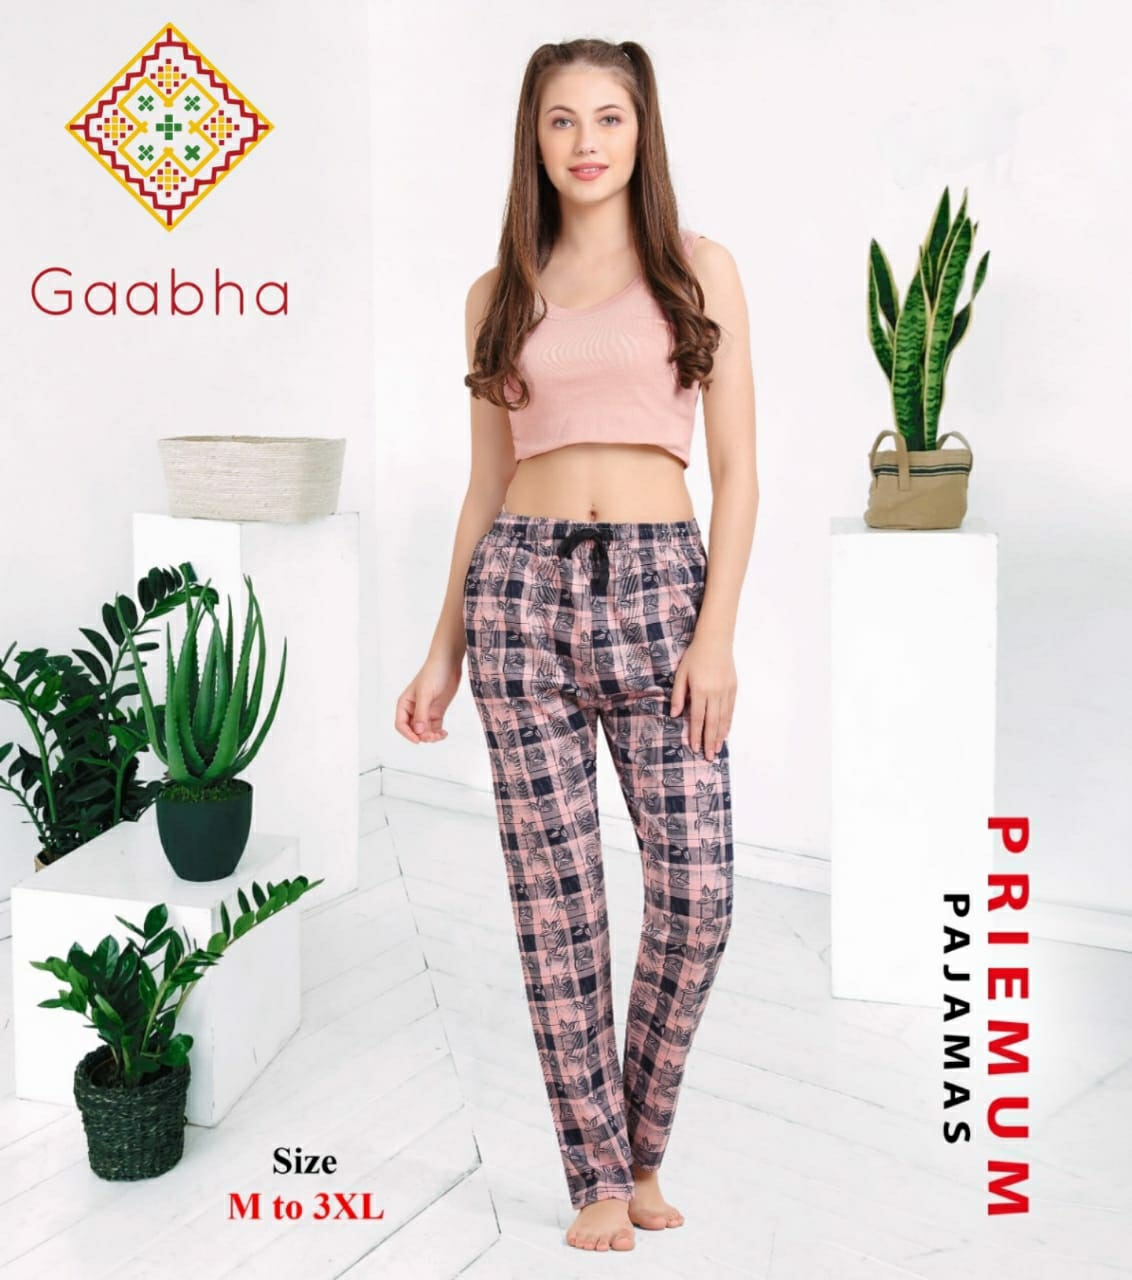 gaabha mercury vol 2 cotton pant catalog